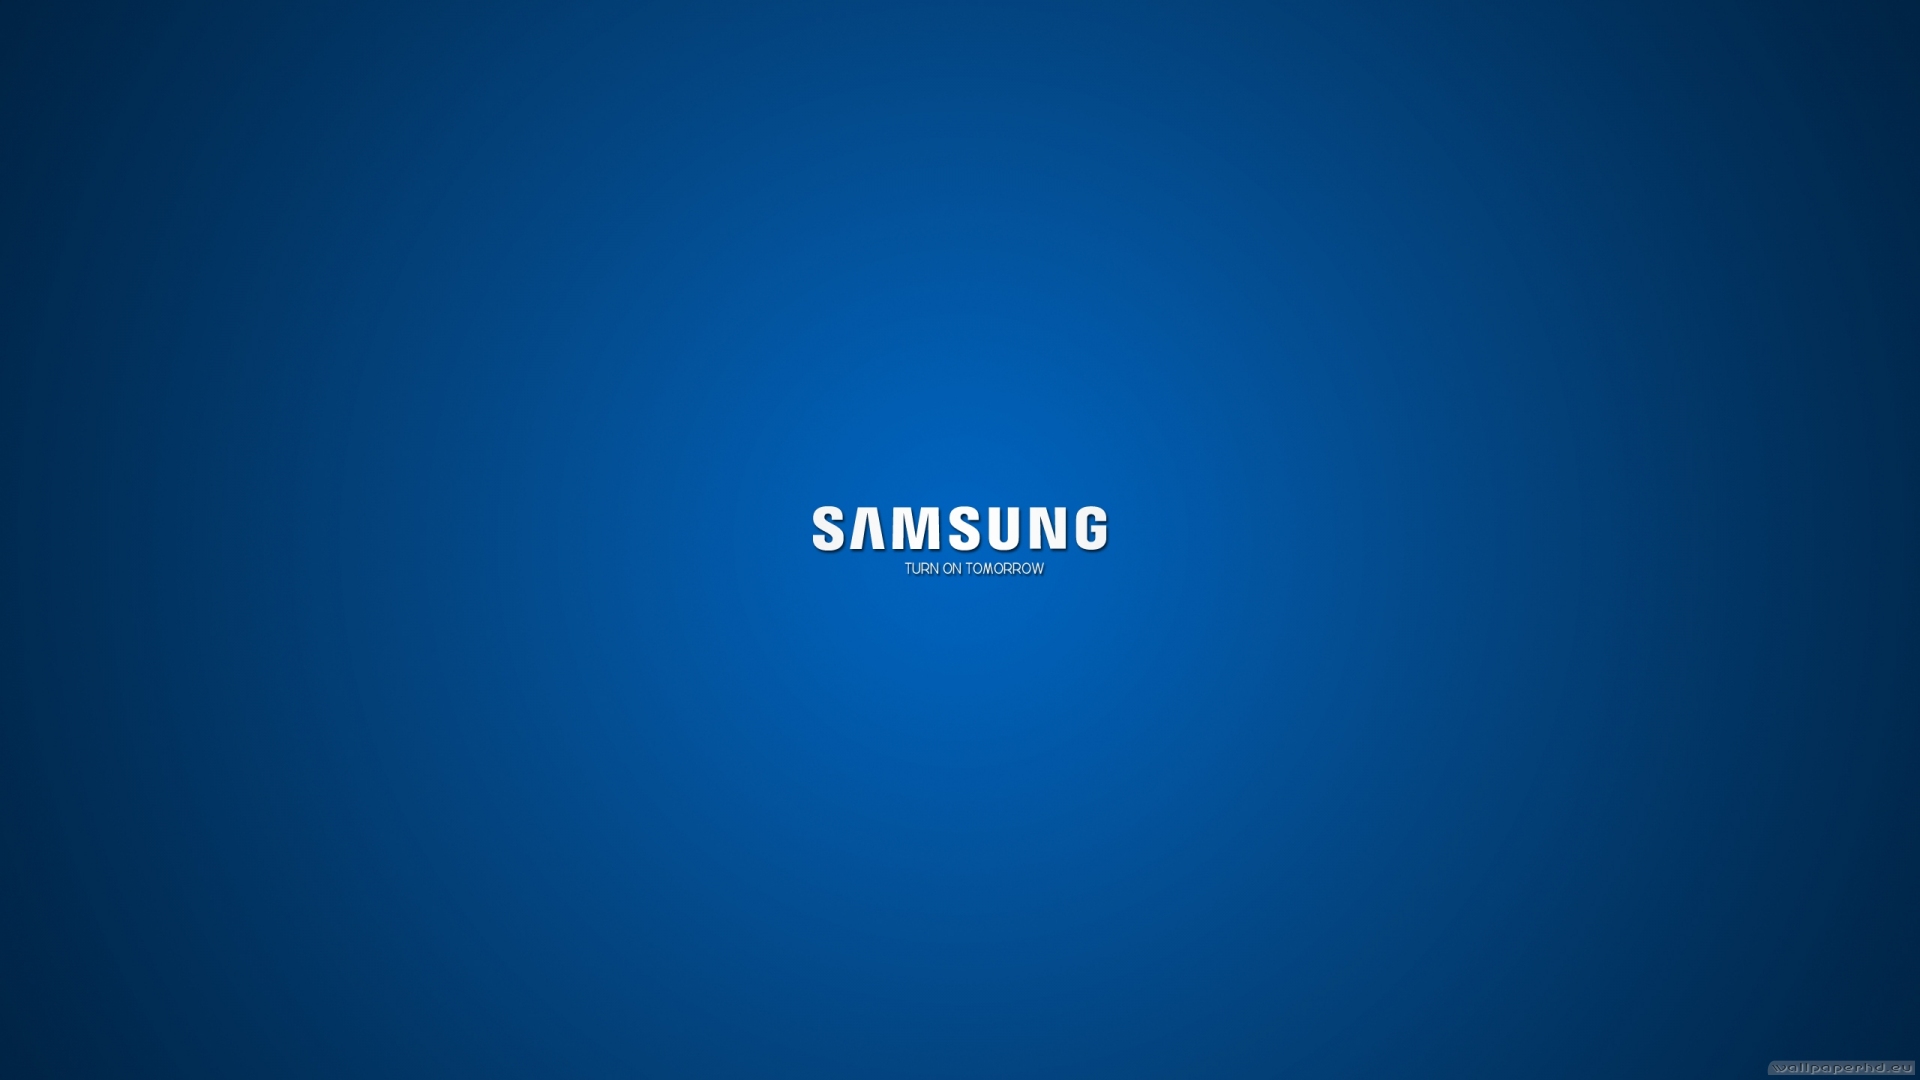 Samsung Galaxy Note 2 Wallpaper Hd Beautiful beach hd wallpapers 1920x1080